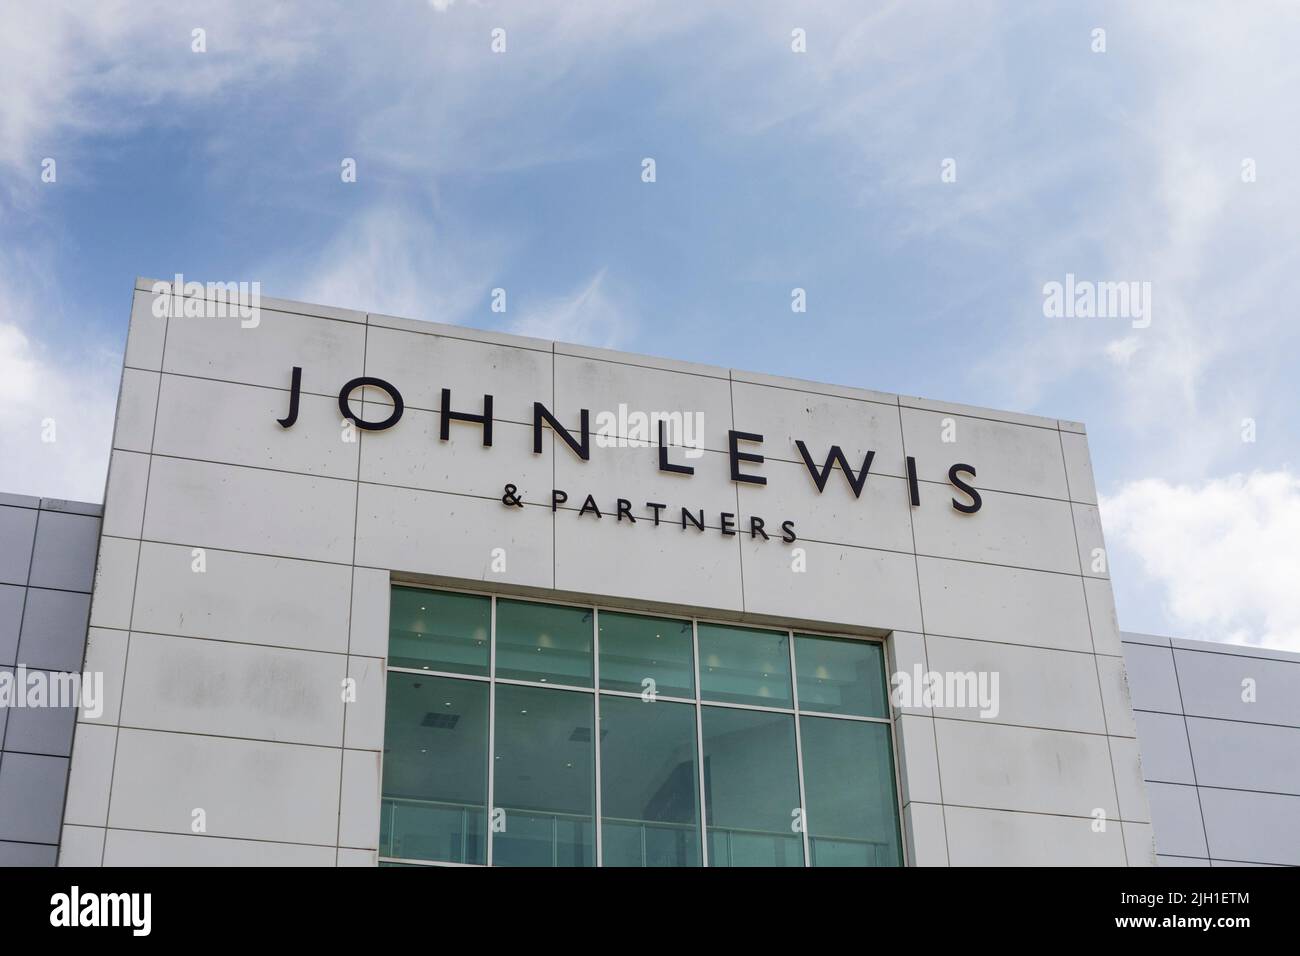 John Lewis & Partners sign on facade of building, The Mall, Cribbs Causeway, Bristol, UK Stock Photo